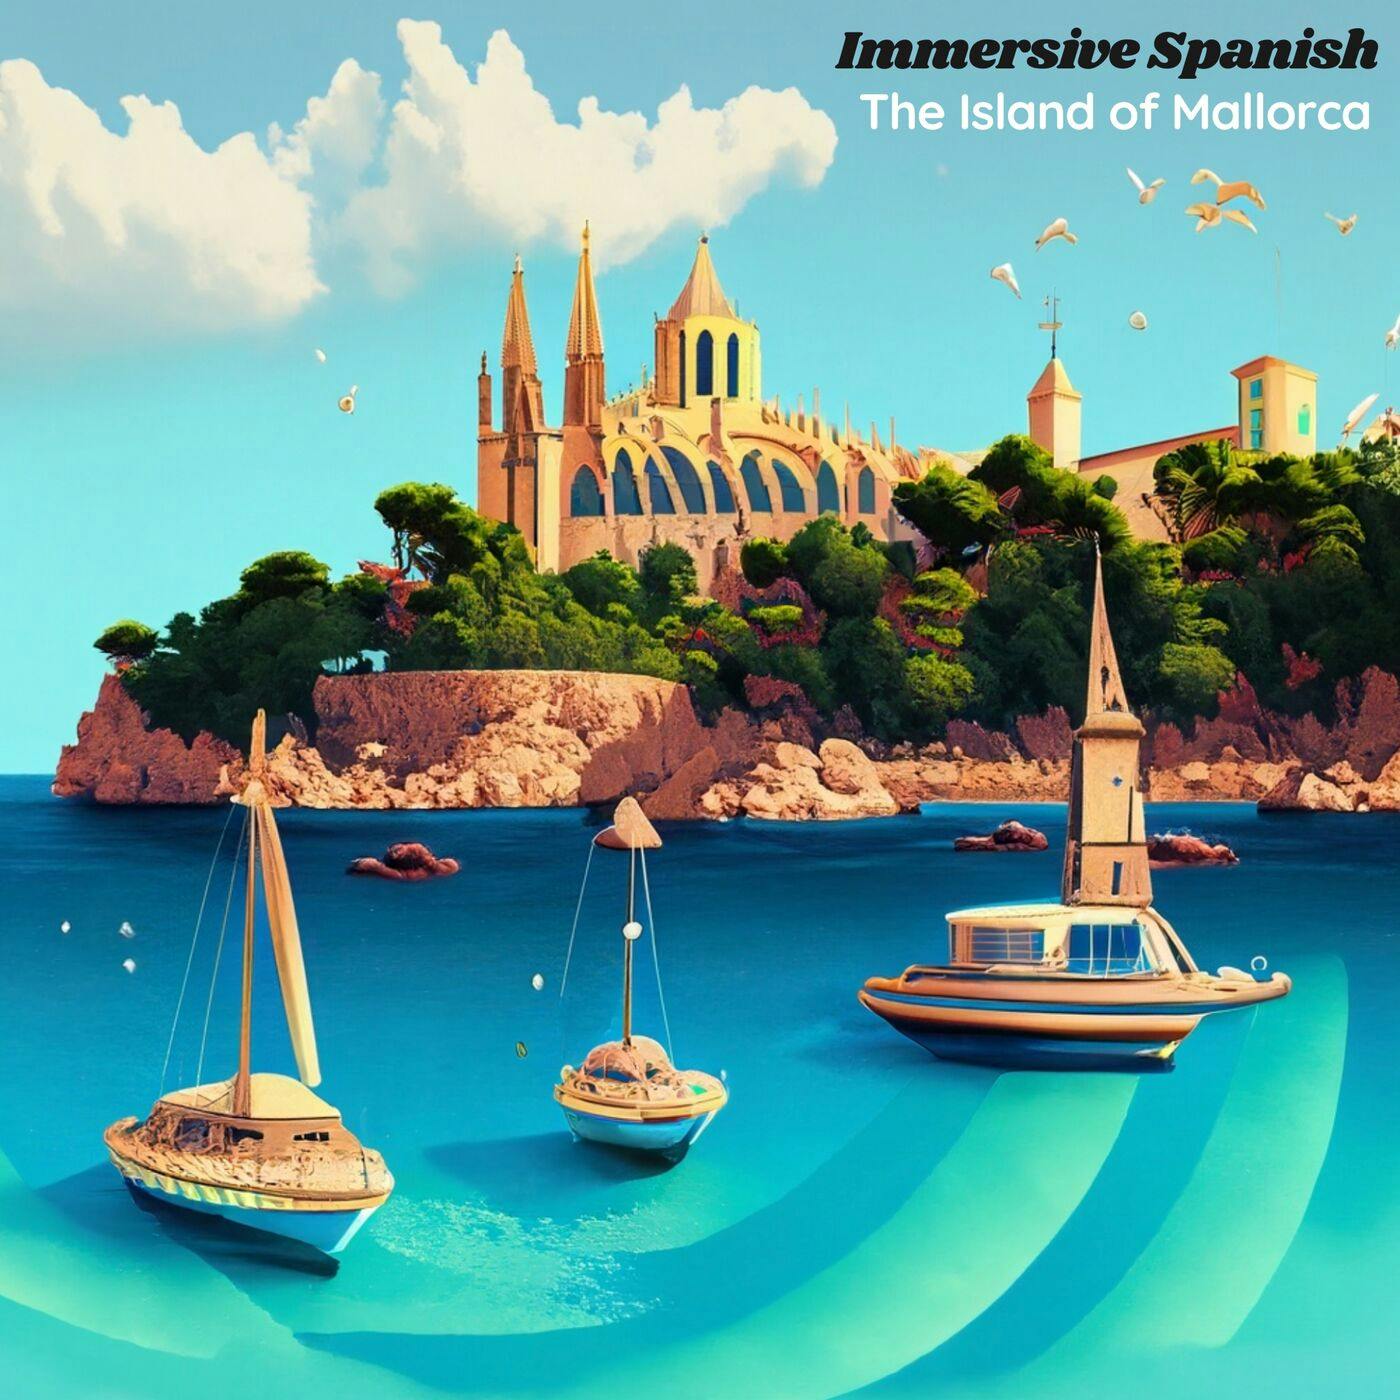 Immersive Spanish "The Island of Mallorca" Preview